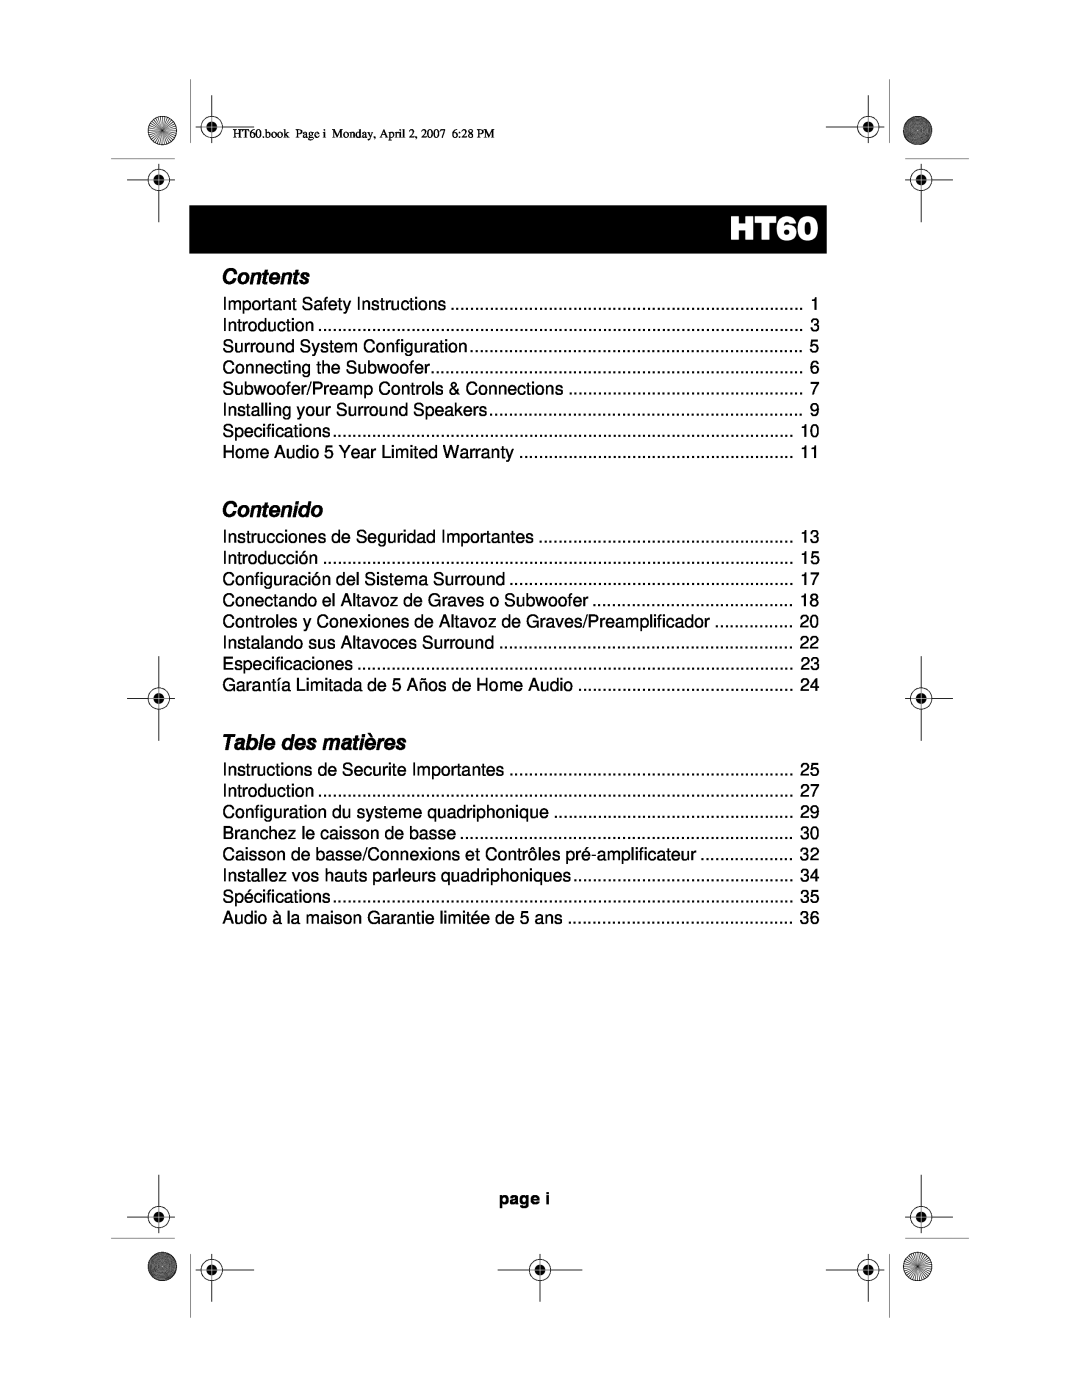 Acoustic Research HT60 operation manual Contents, Contenido, Table des matières, page 